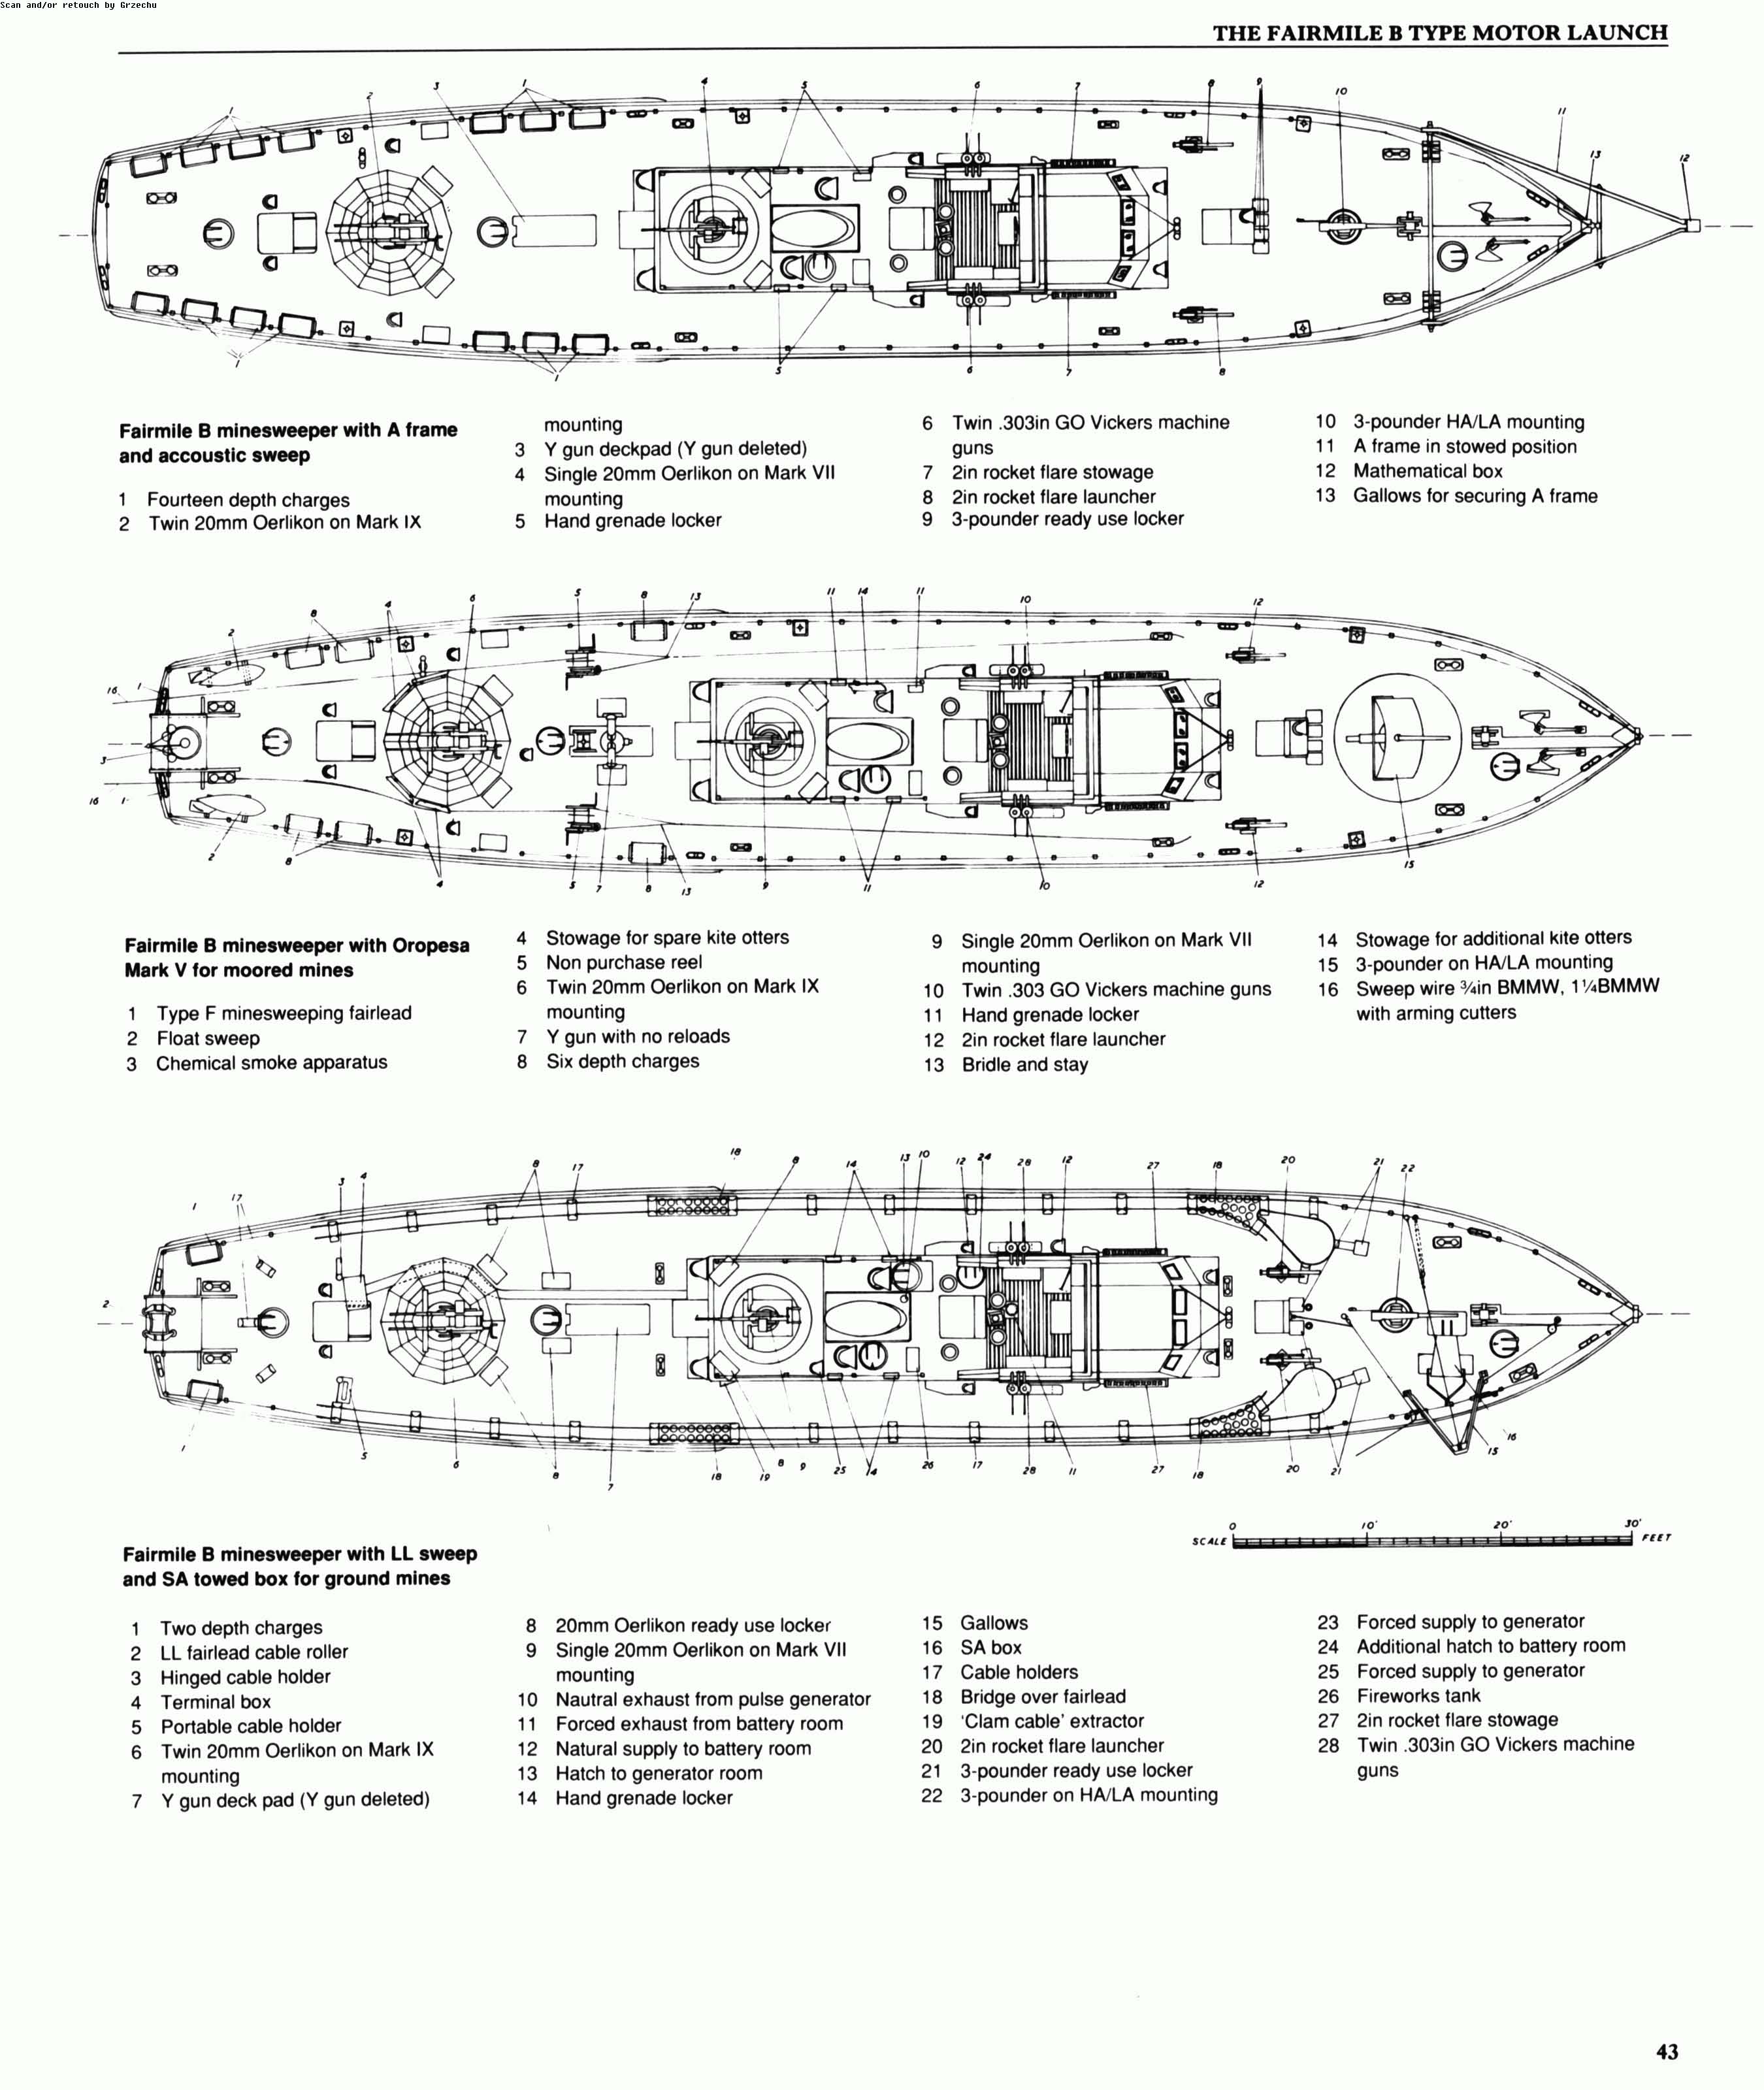 Allied Coastal Forces of World War II (1) Fairmile designs & U.S. submarine chasers_Page_045.jpg